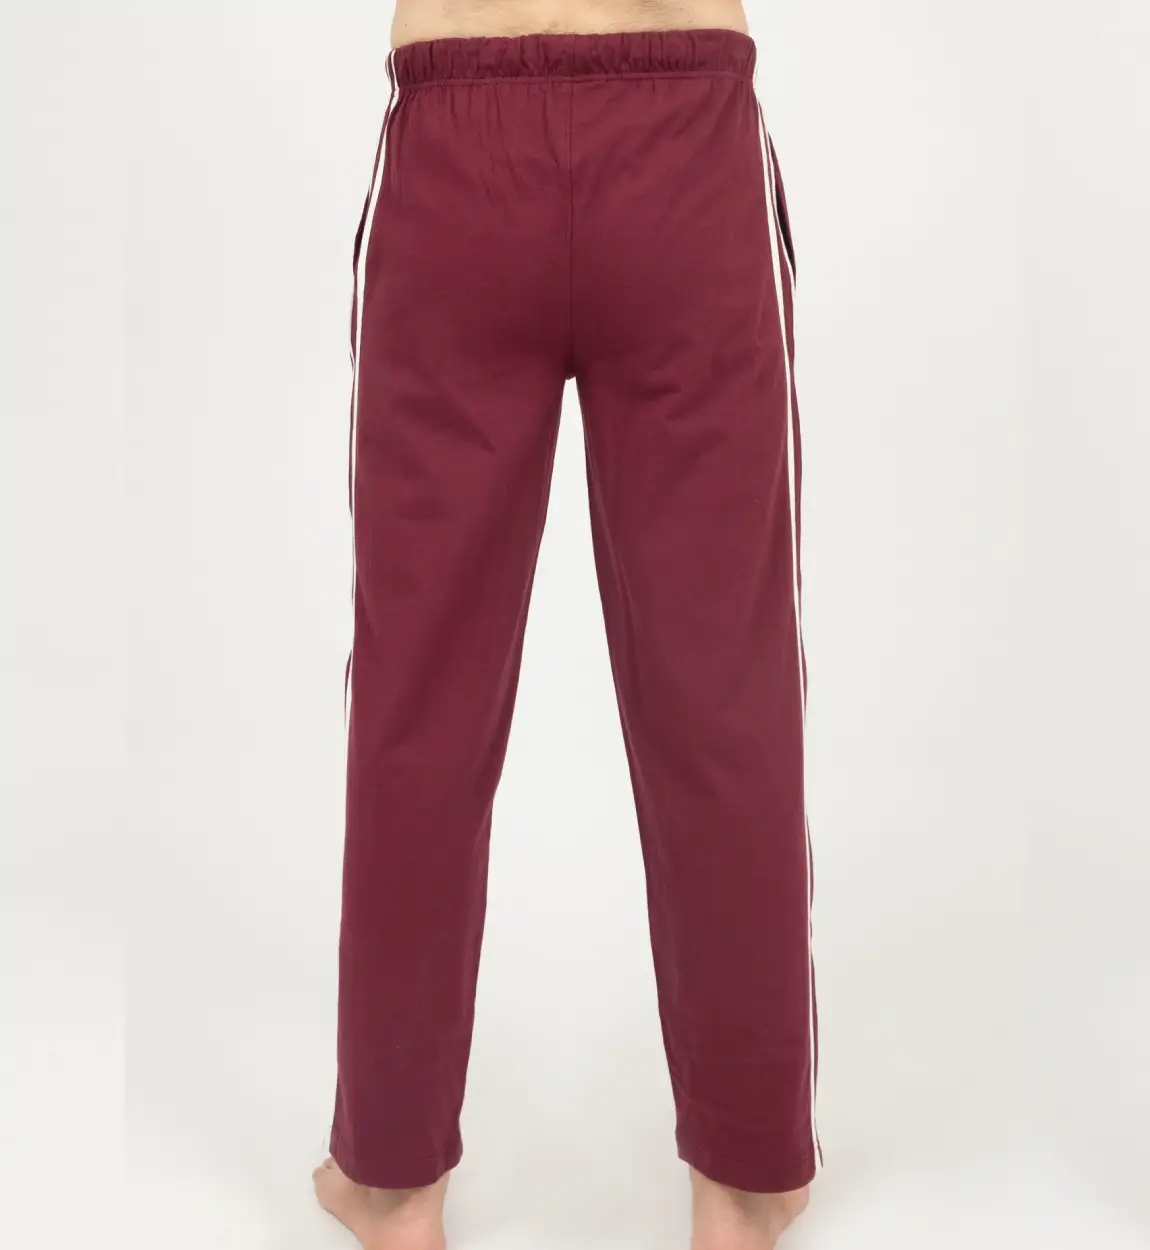 Tendon_Knit_Classic_Pajama_Trouser (3)